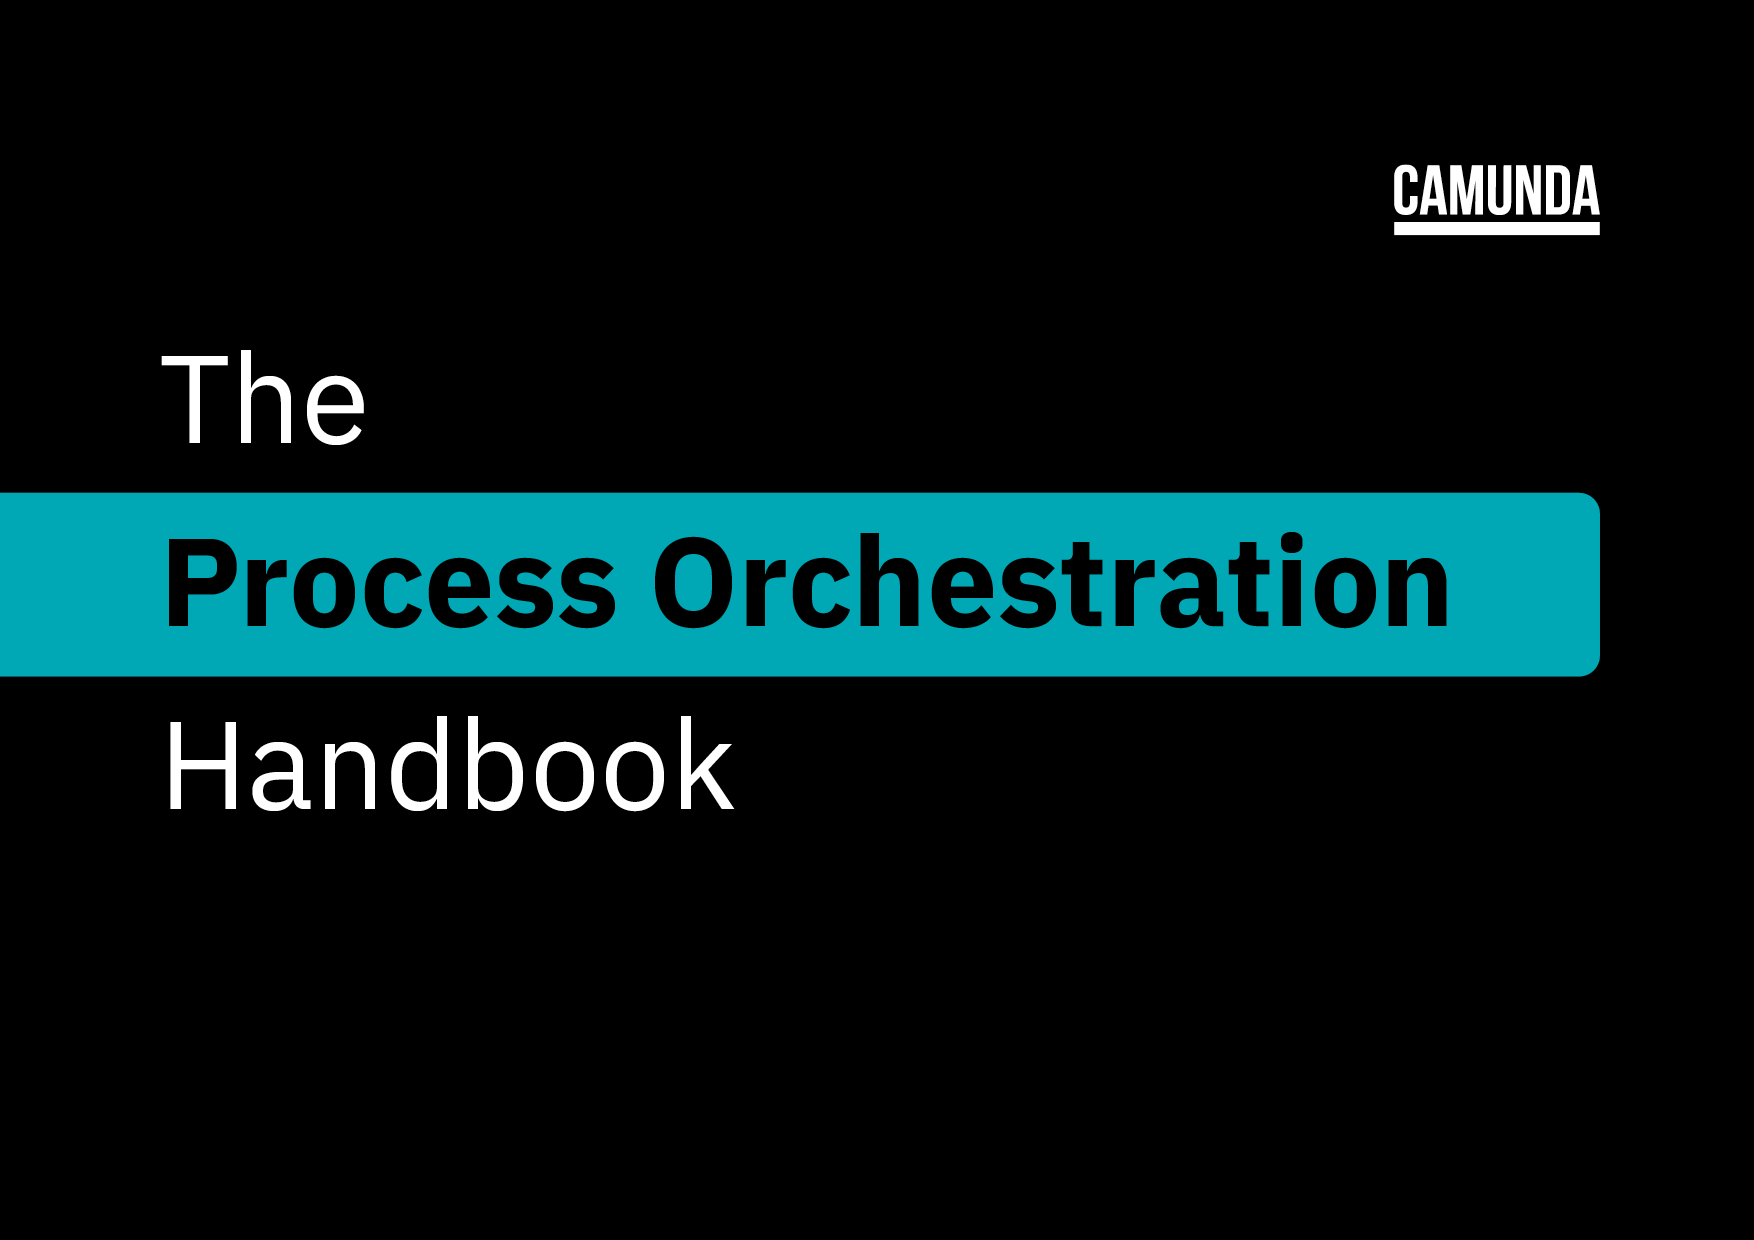 Camunda_Process-Orchestration-Handbook_whitepaper-thumbnail